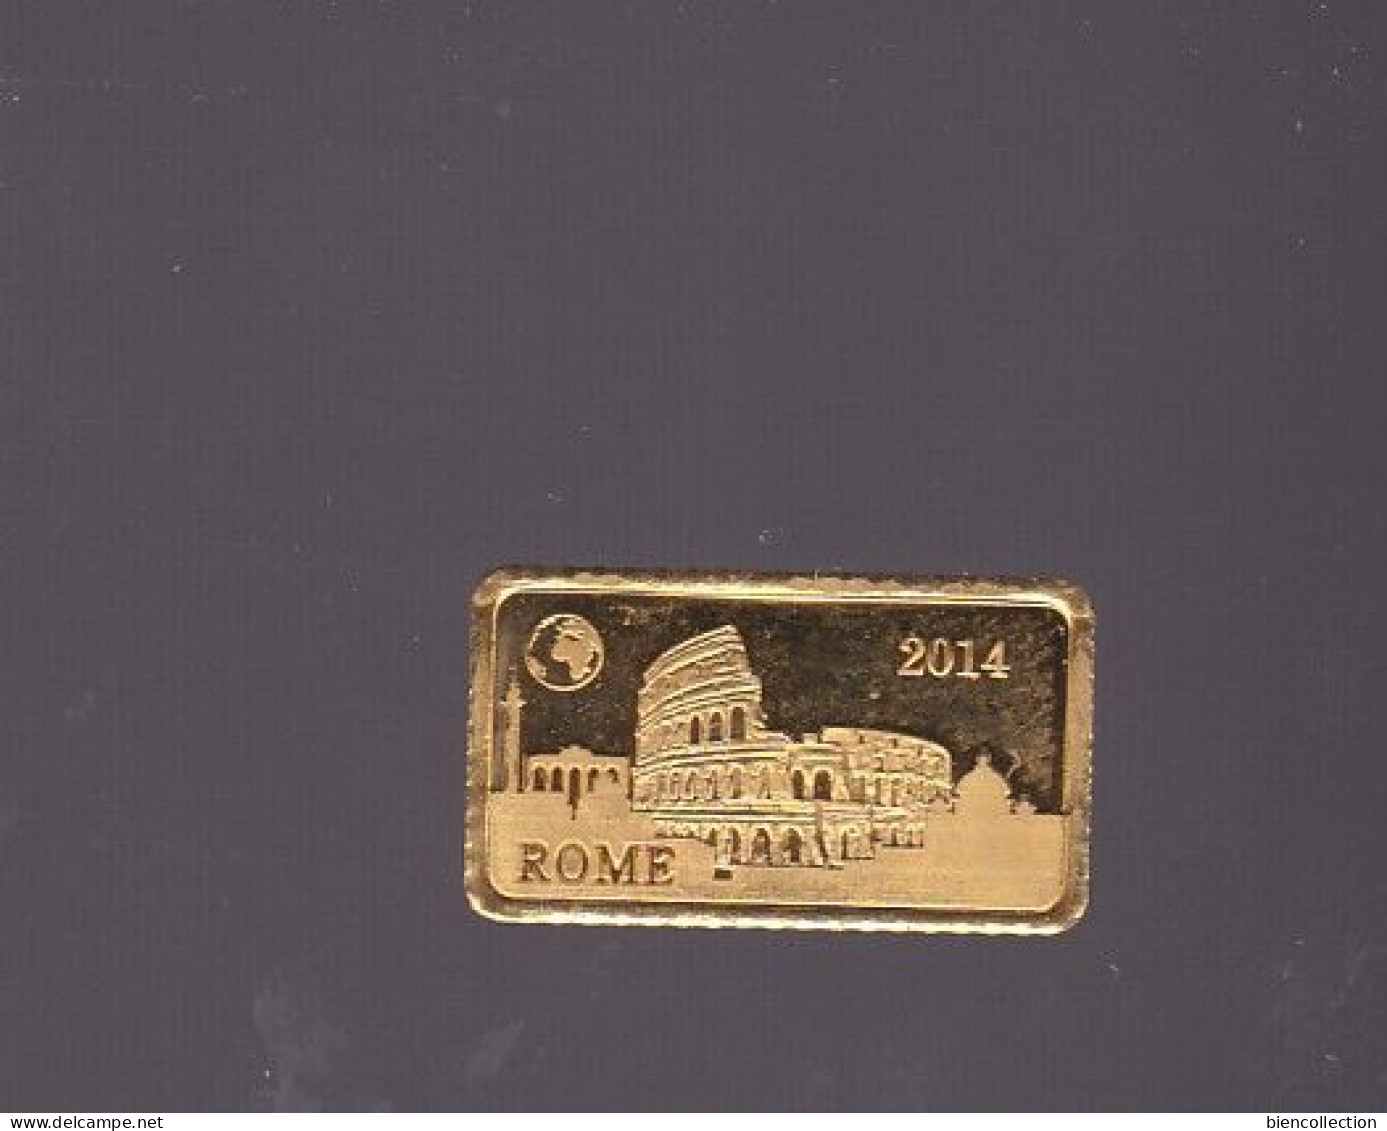 Salomon. 10$ ; Billet En Or 1 Gramme. Gold Banknote - Salomons